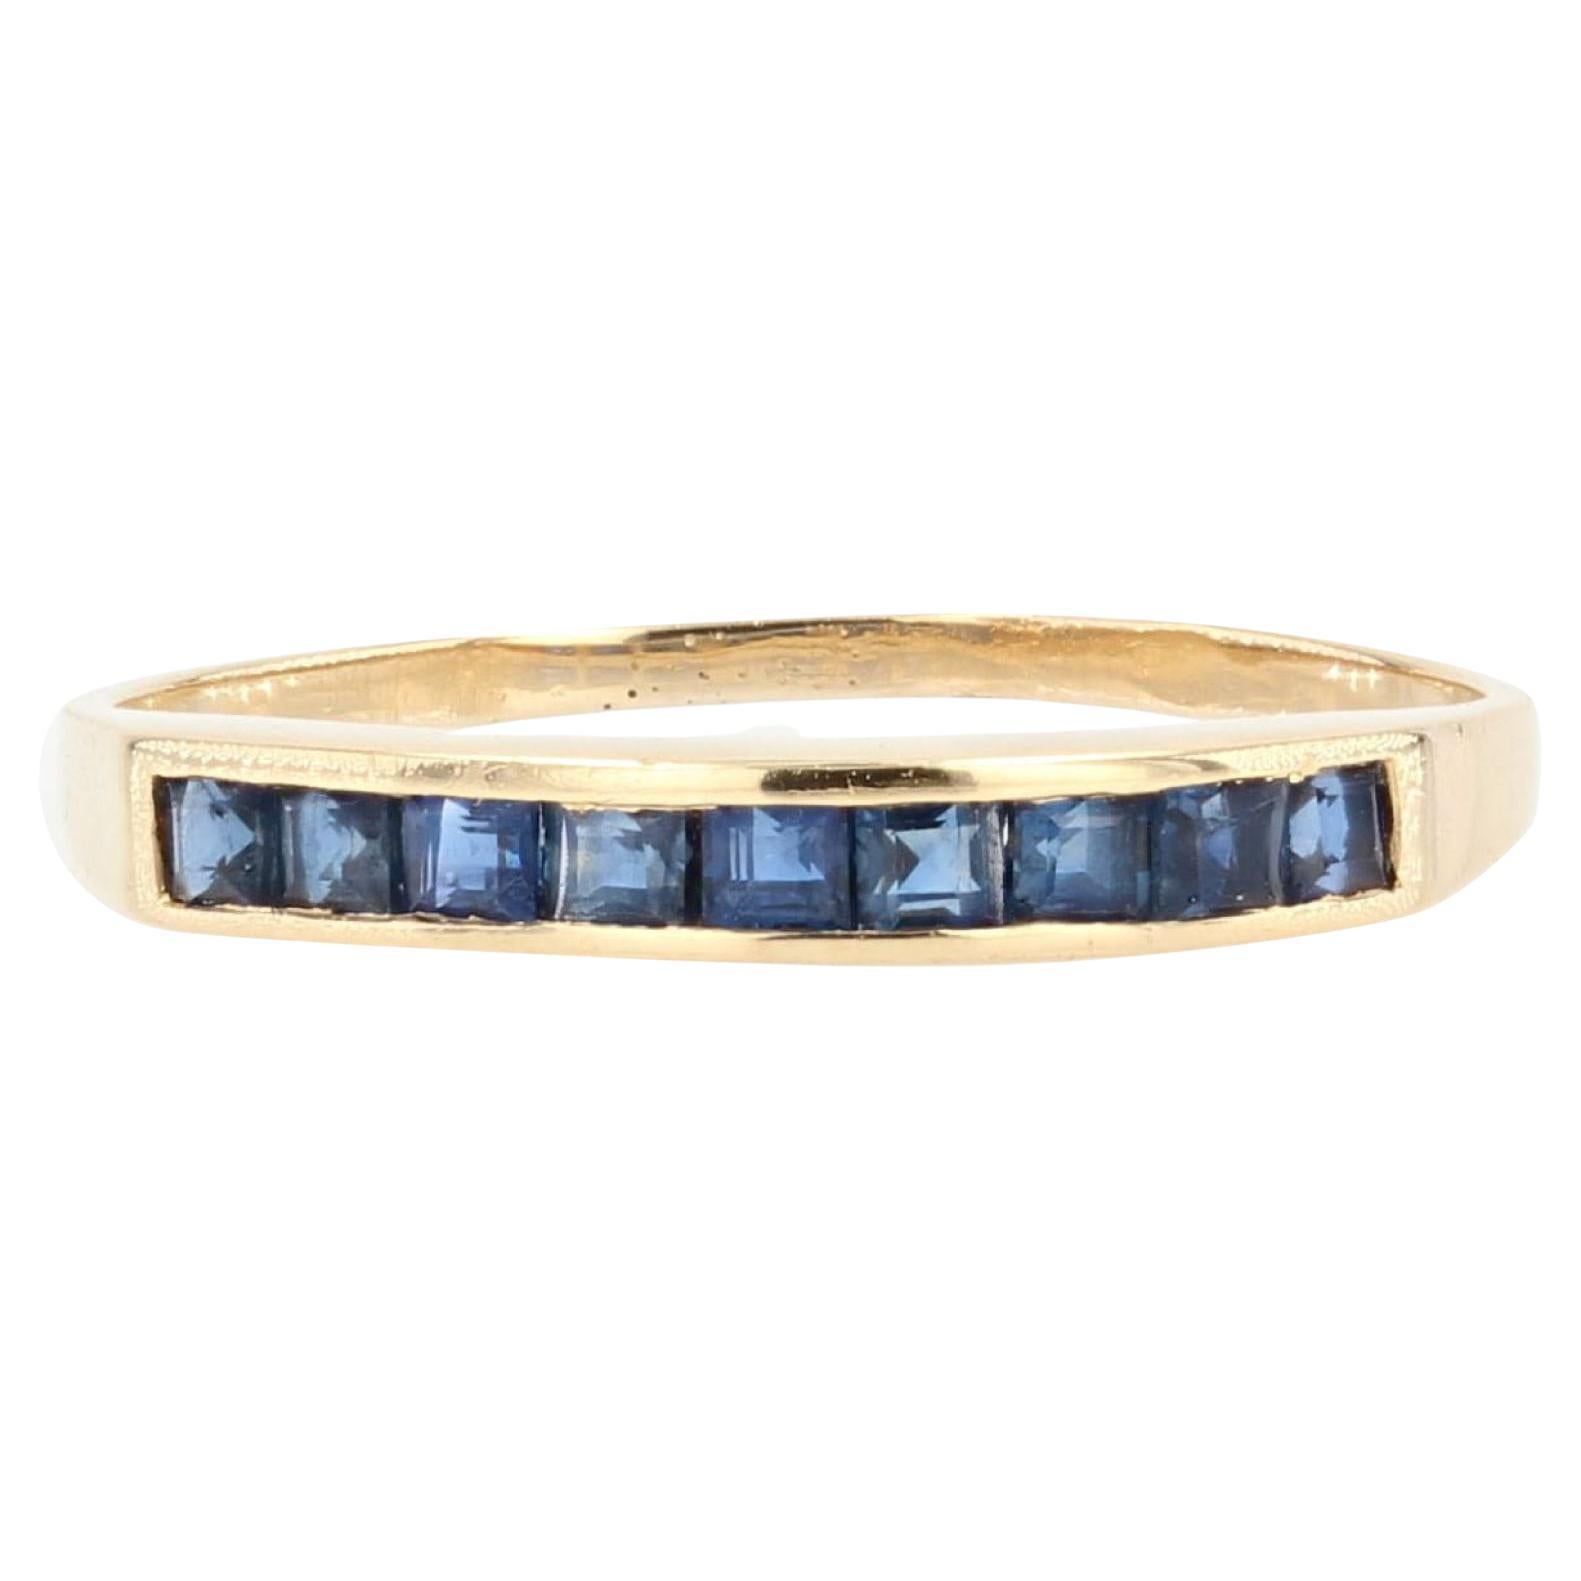 Modern Calibrated Sapphire 18 Karat Yellow Gold Wedding Ring